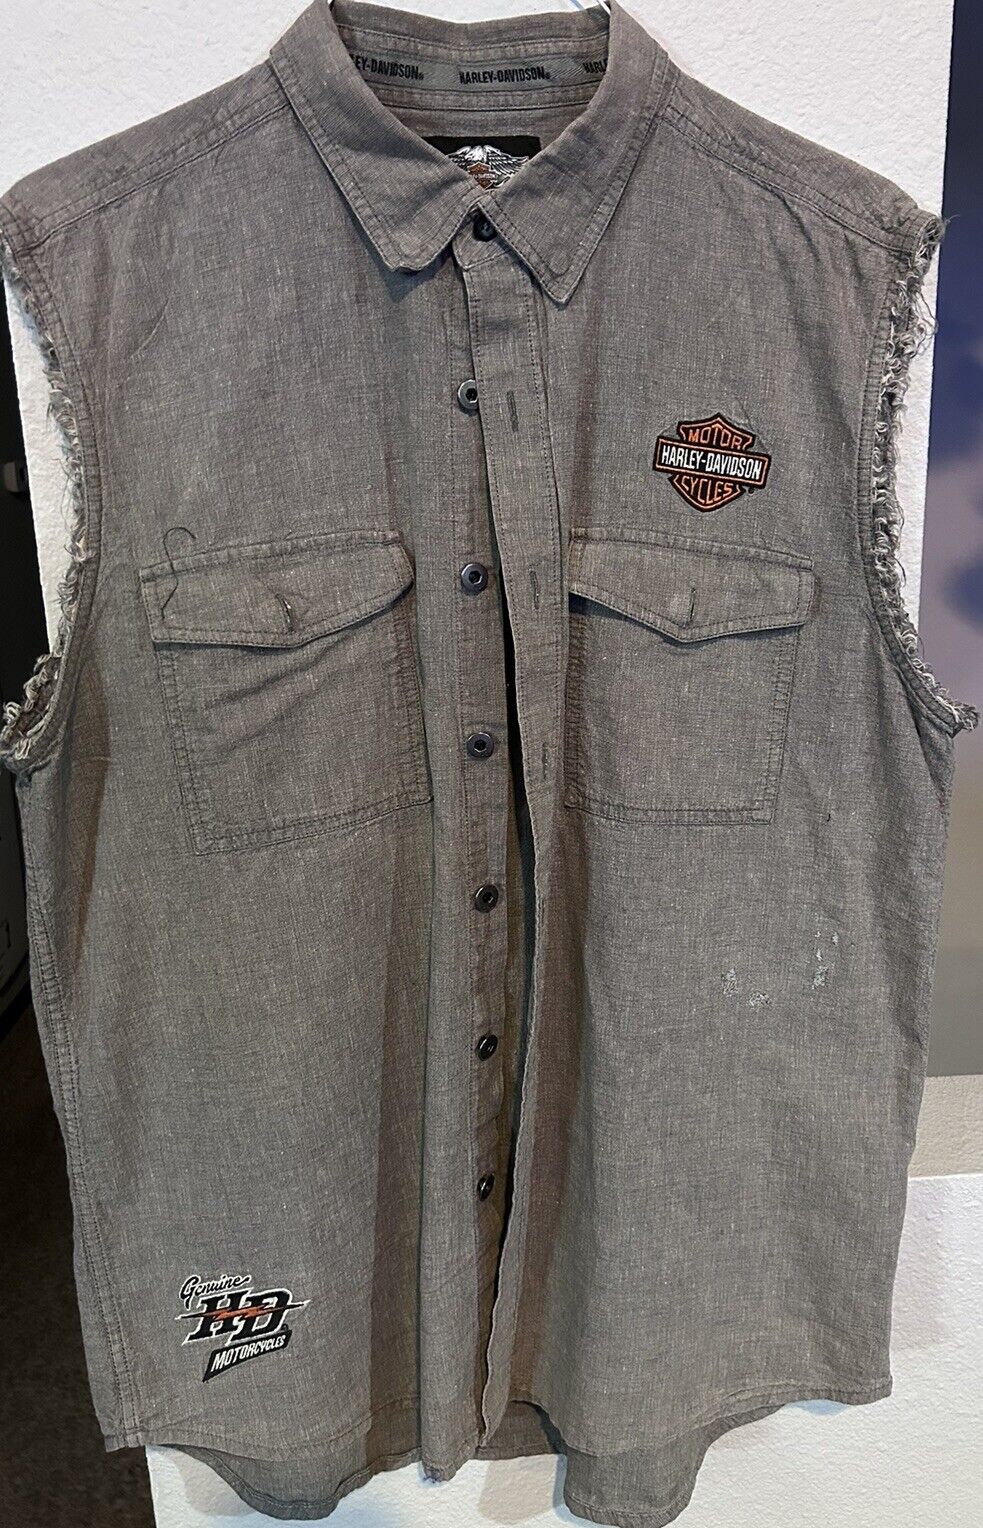 Vintage Sleeveless Shirt - Harley Davidson Gray Riding Vest Button Up